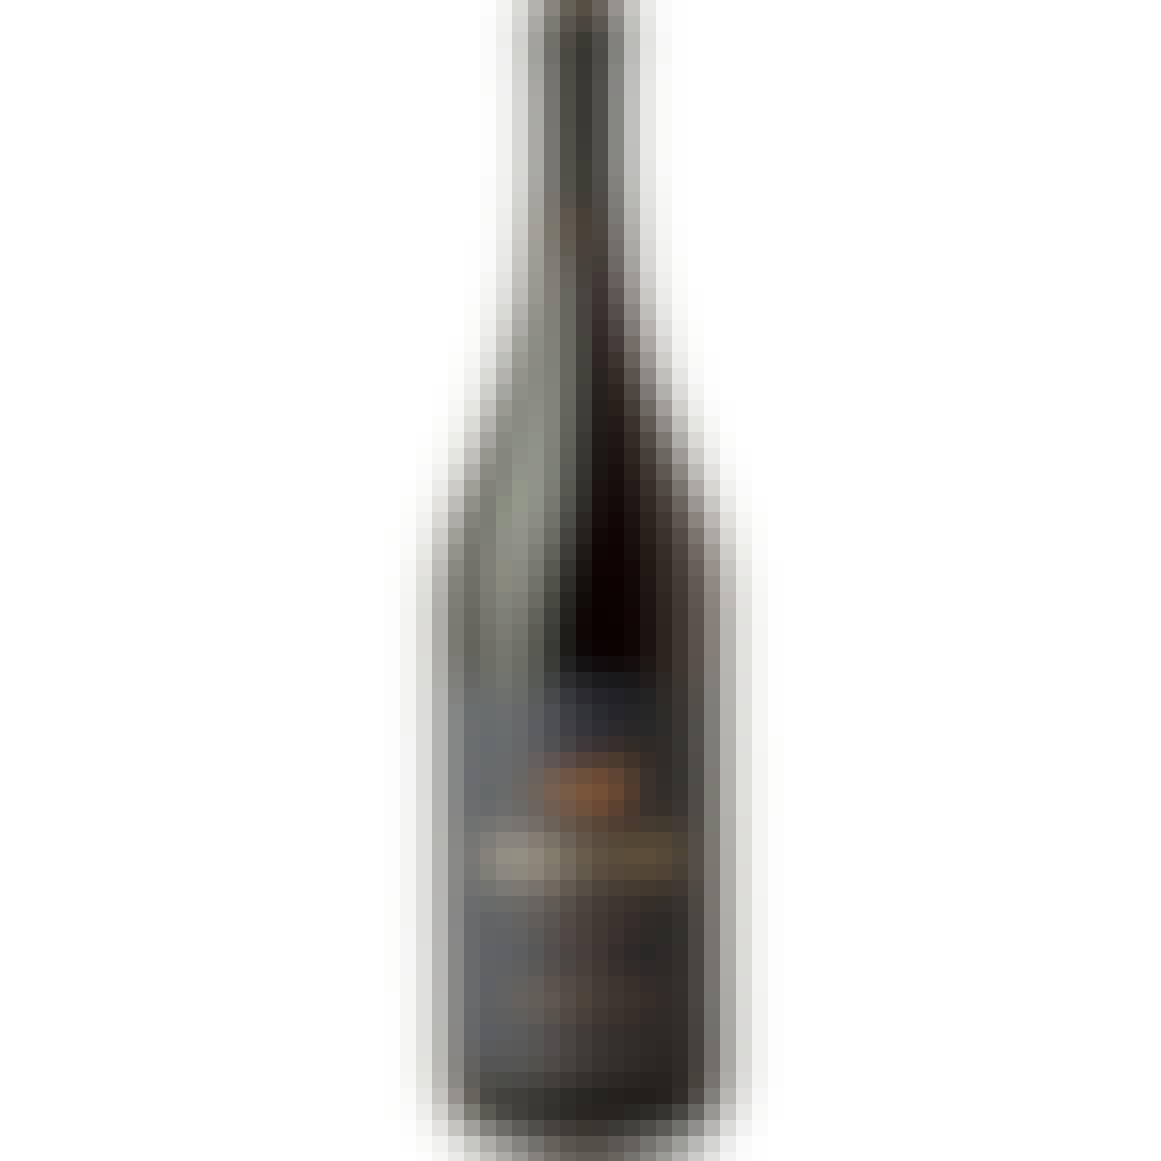 Decoy Limited Sonoma Coast Pinot Noir 2019 750ml